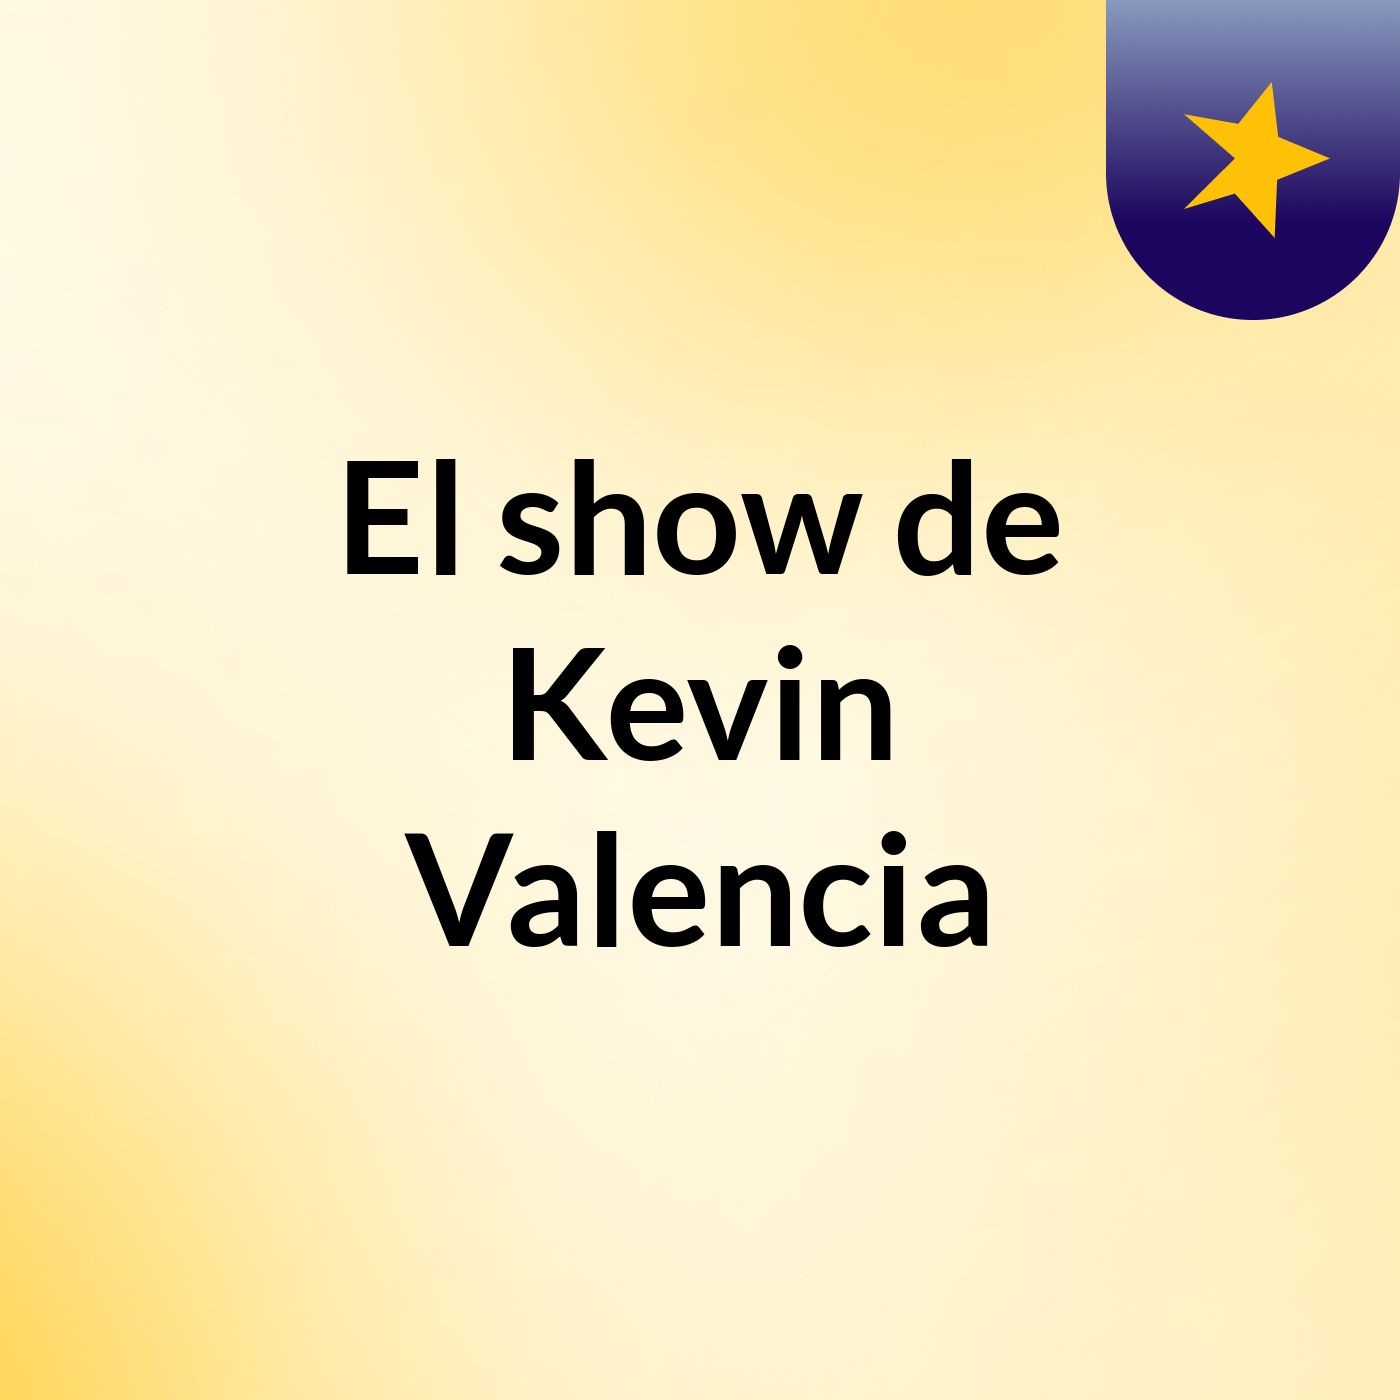 El show de Kevin Valencia